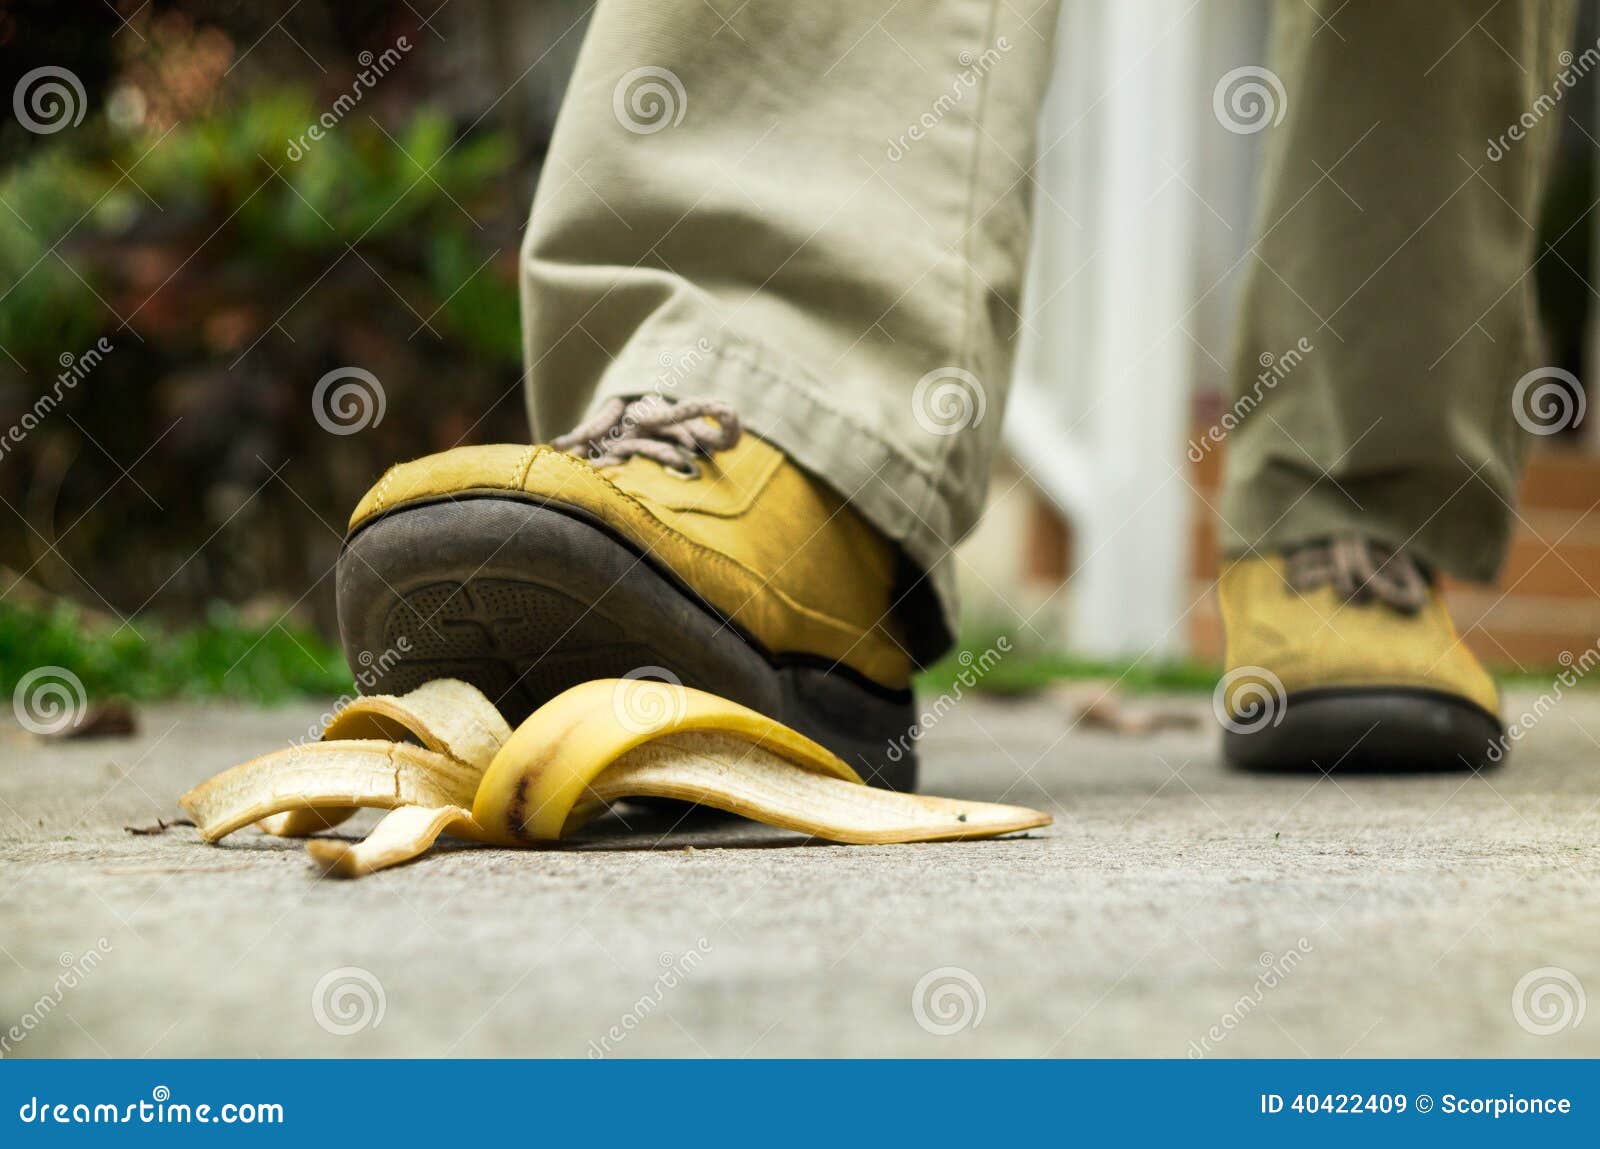 Man Stepping On Banana Peel Stock Photo - Image: 40422409